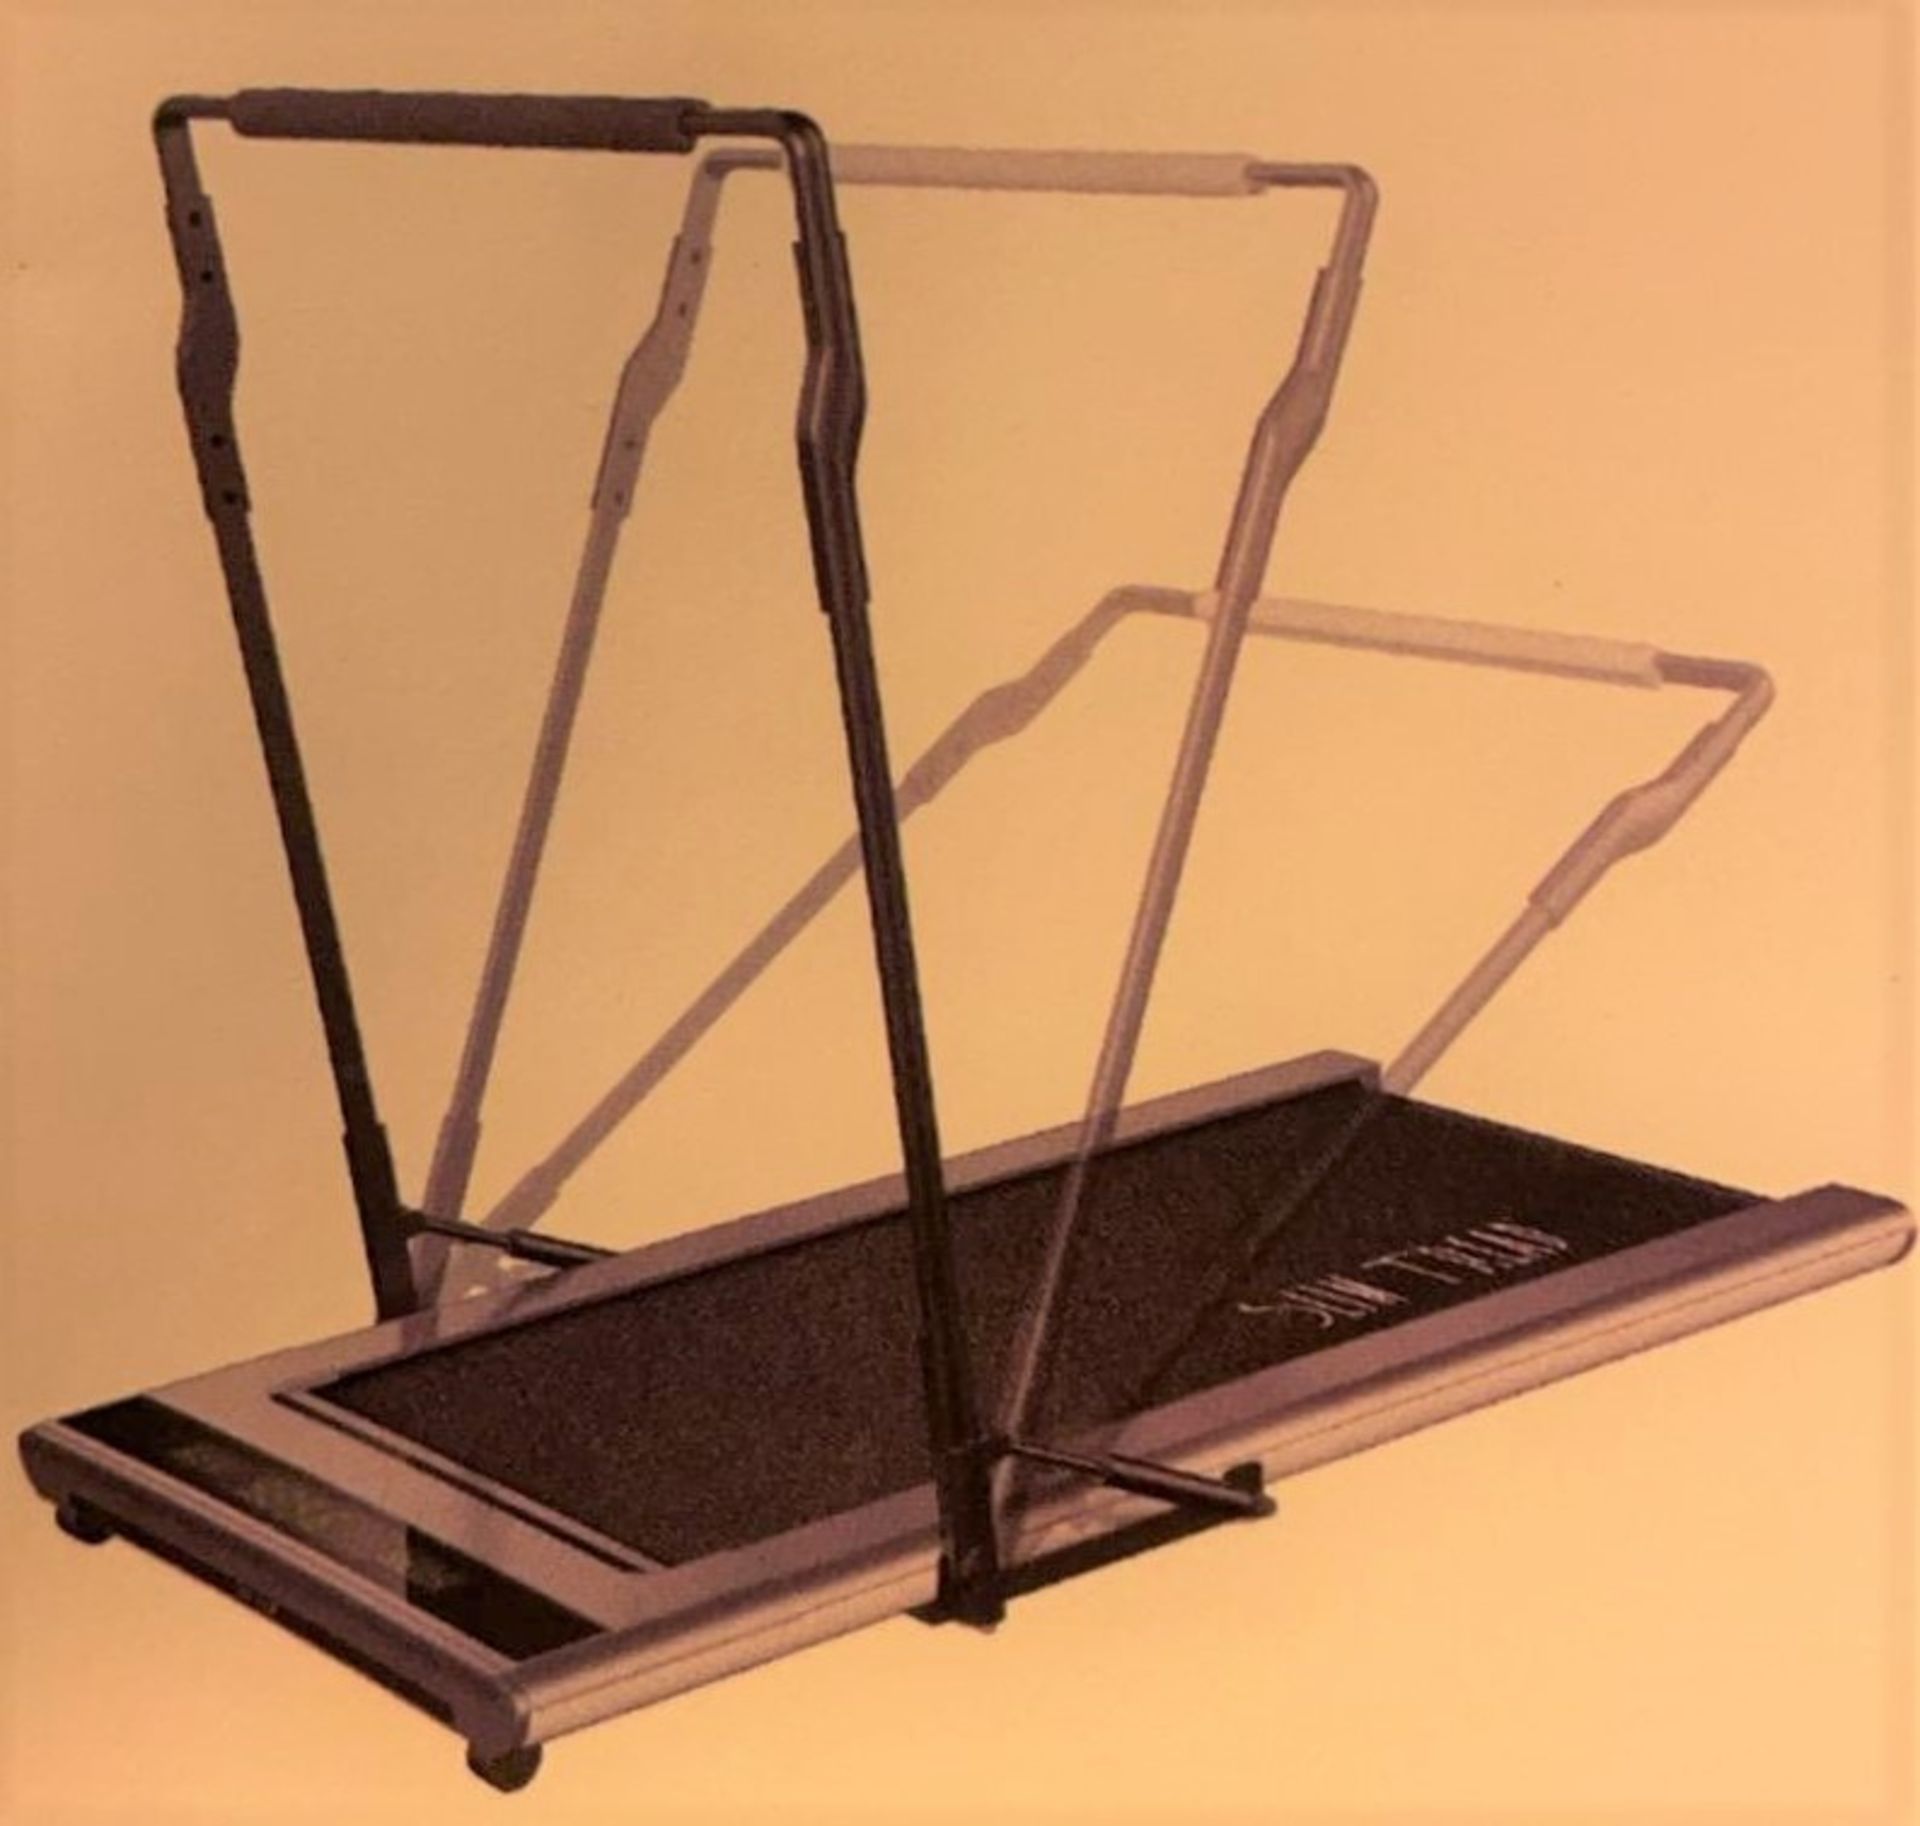 1 x Slim Tread Ultra Thin Smart Treadmill Running / Walking Machine - Lightweight With Folding - Image 3 of 15